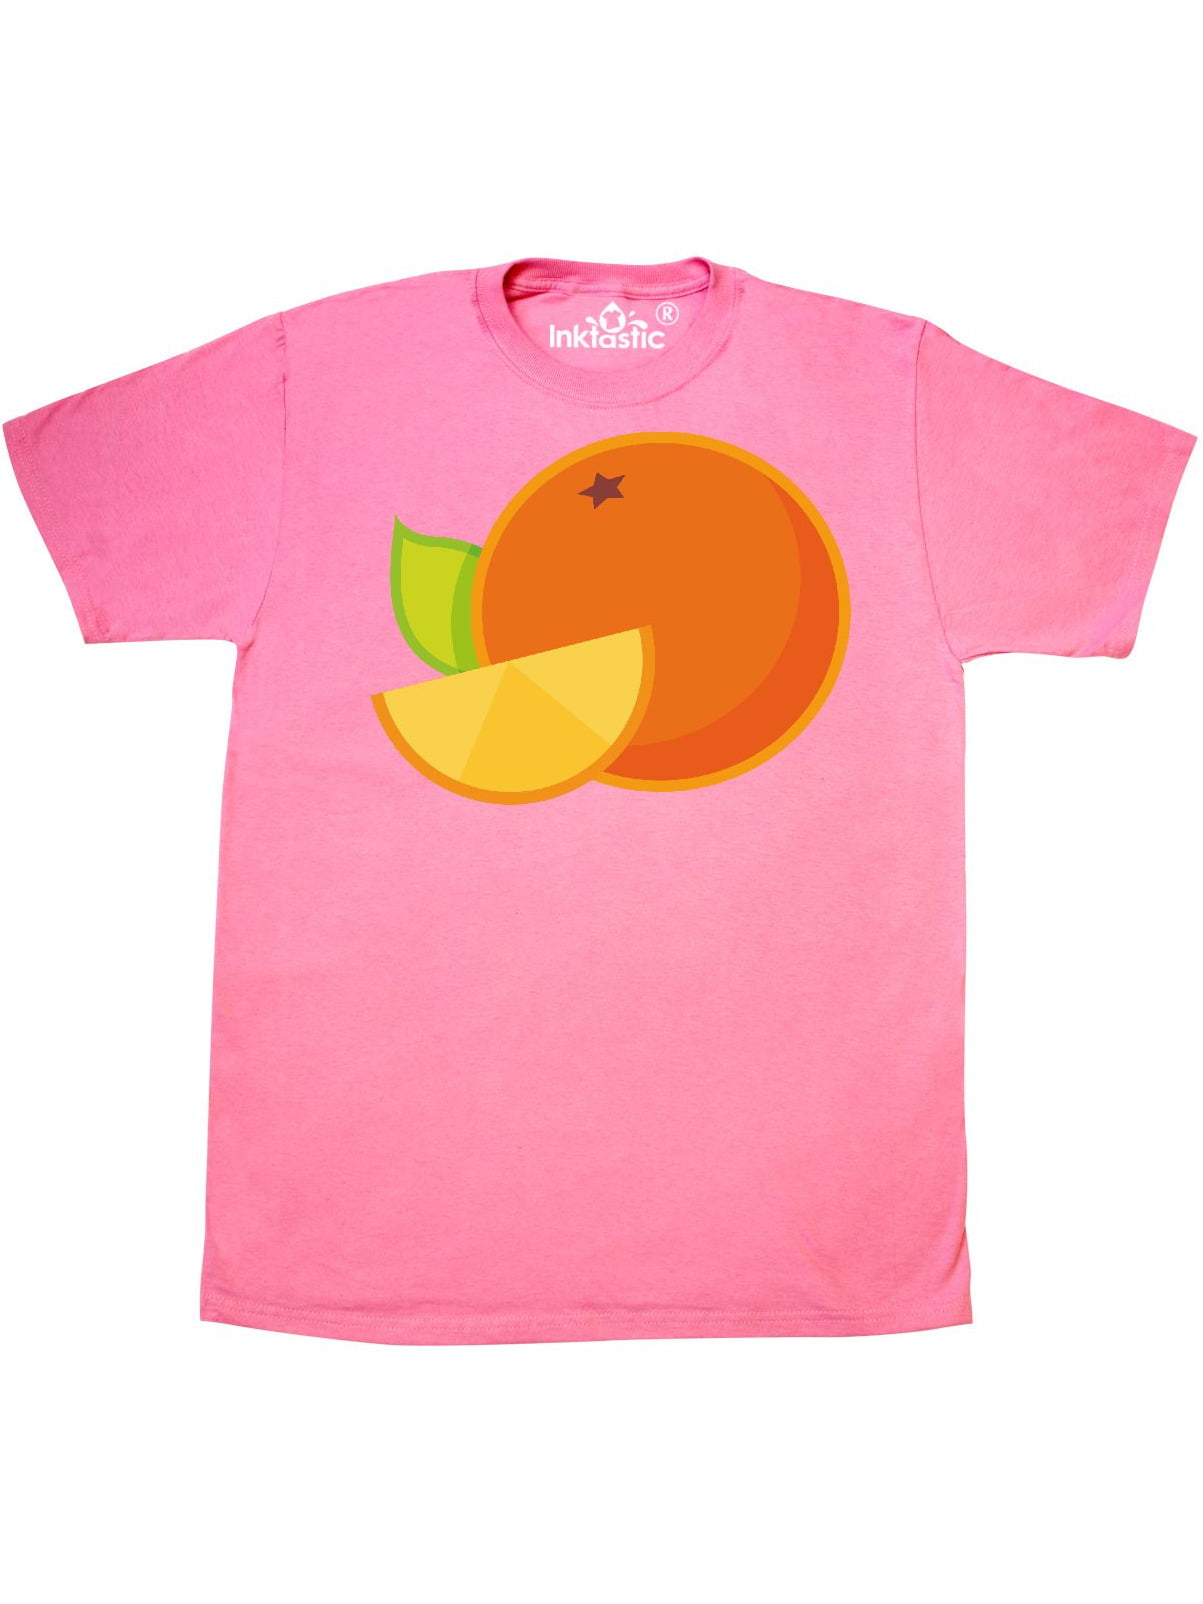 INKtastic - Orange Fruit T-Shirt - Walmart.com